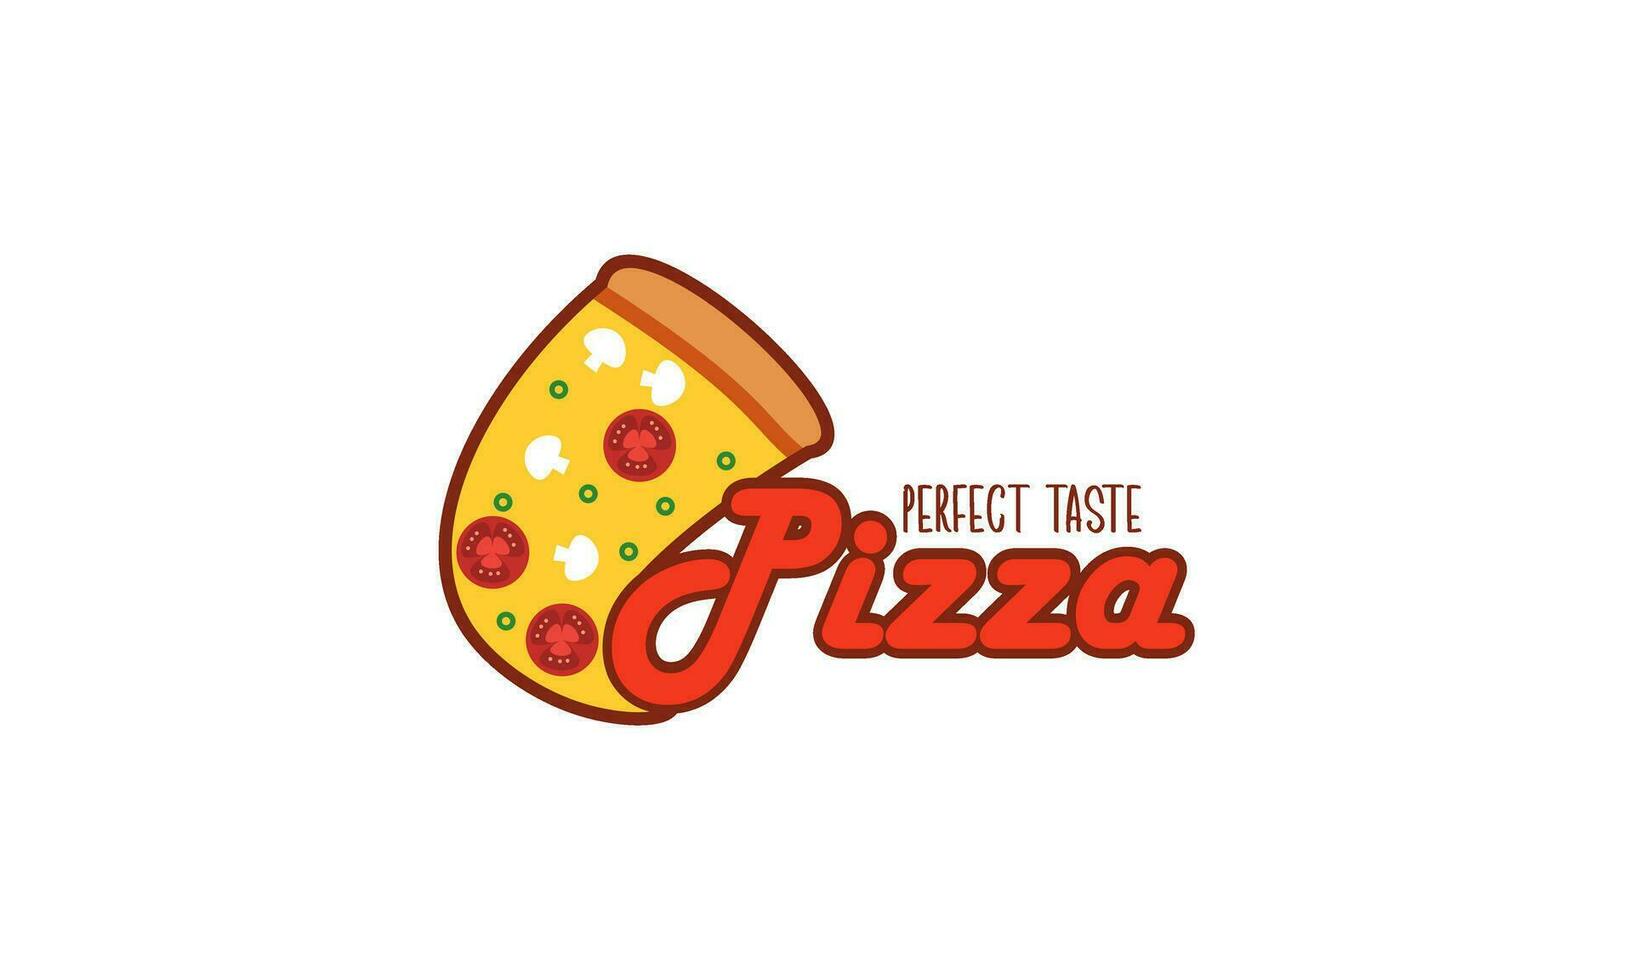 pizza cafeteria logotipo emblema para velozes Comida restaurante vetor